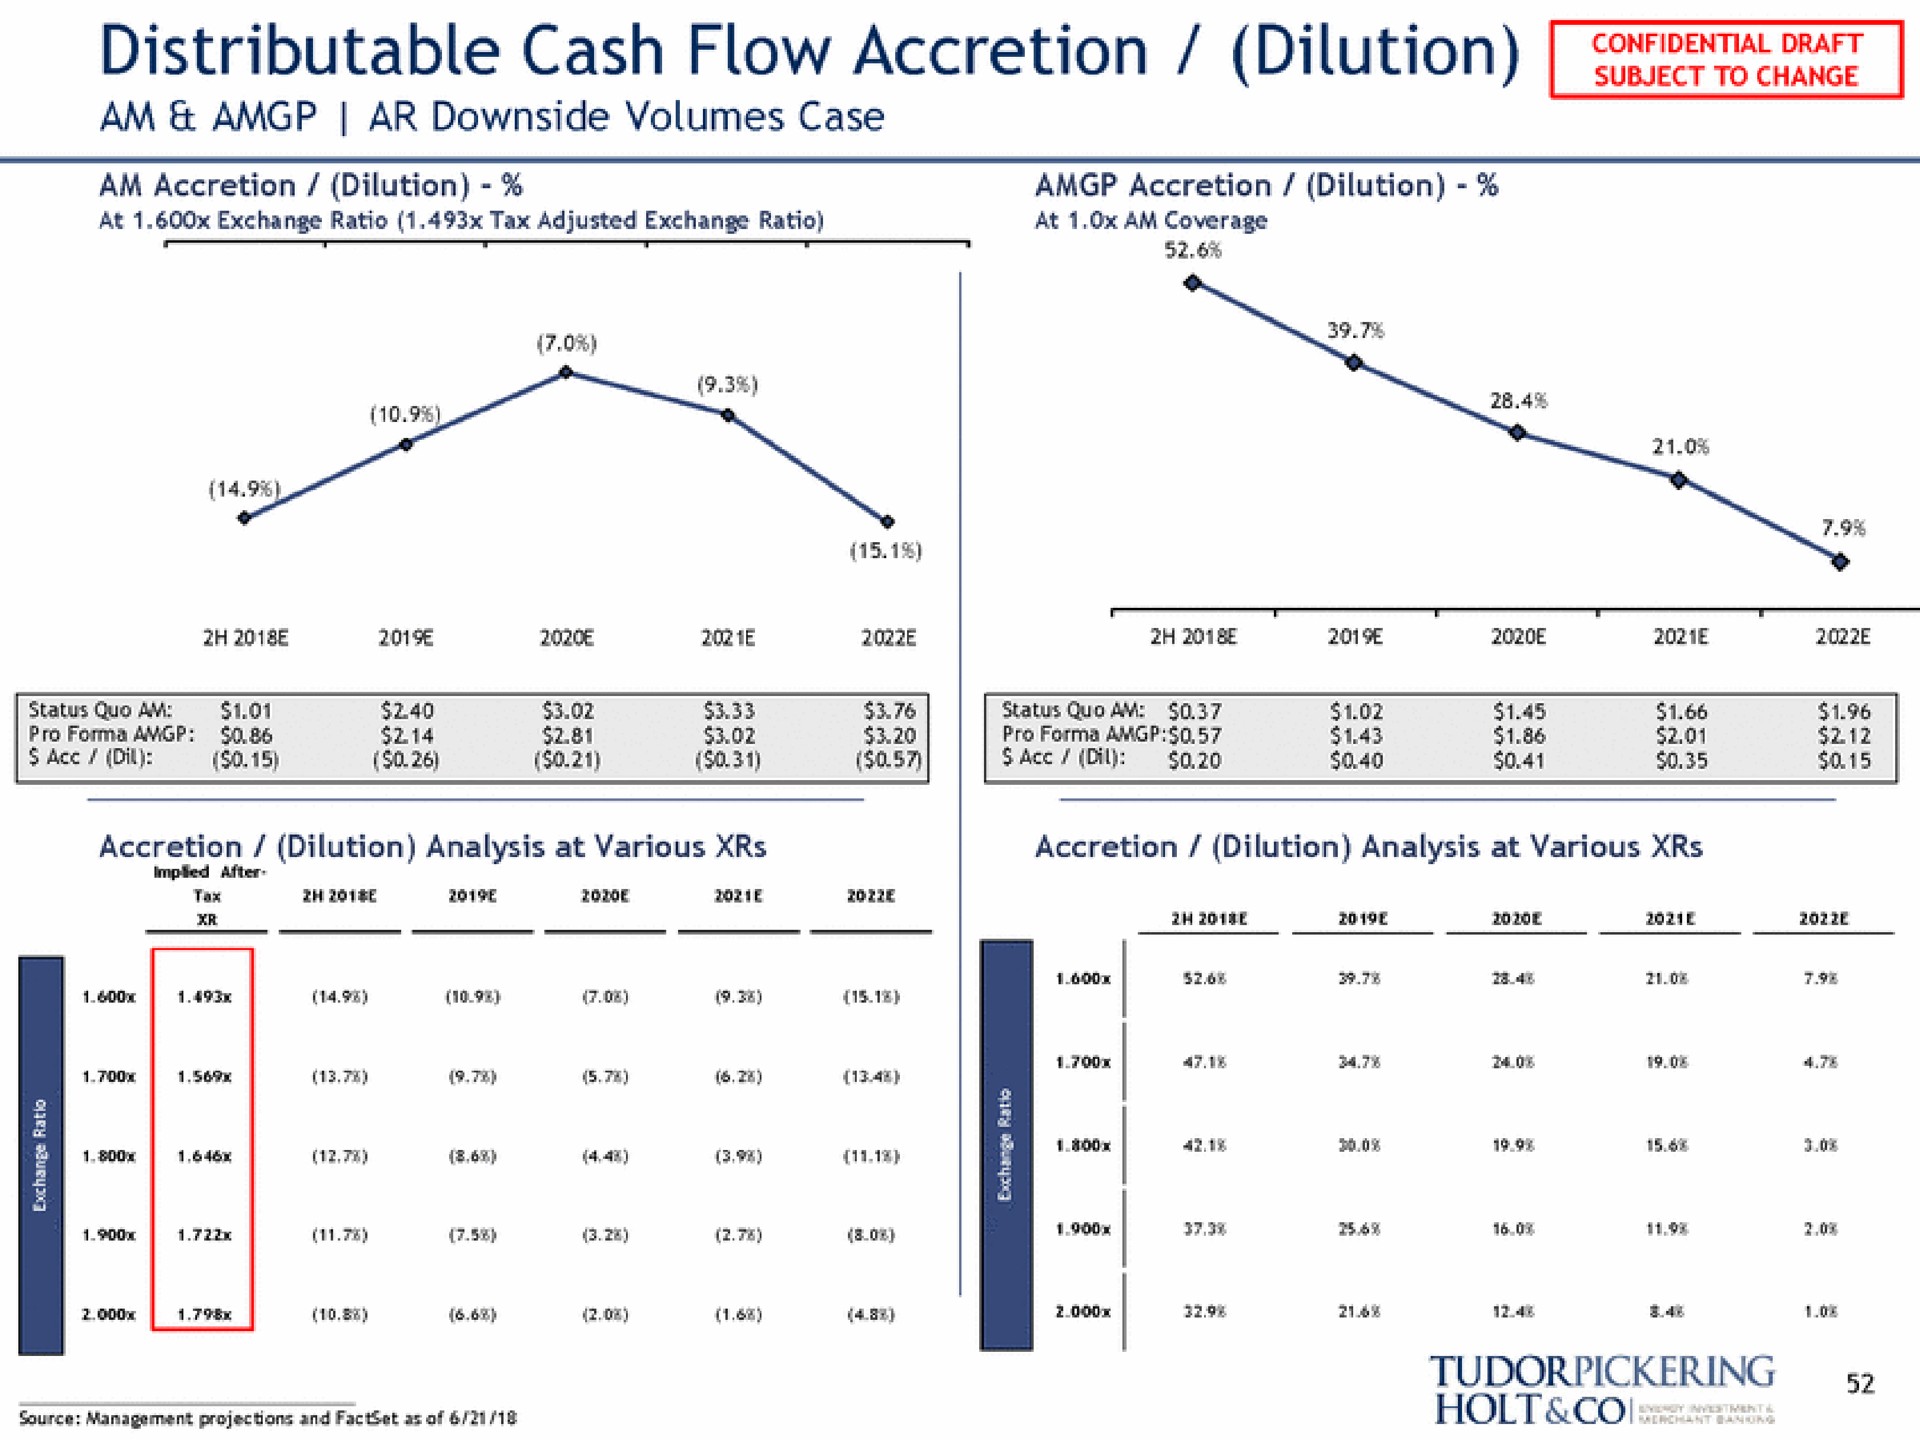 distributable cash flow accretion dilution oer holt | Tudor, Pickering, Holt & Co